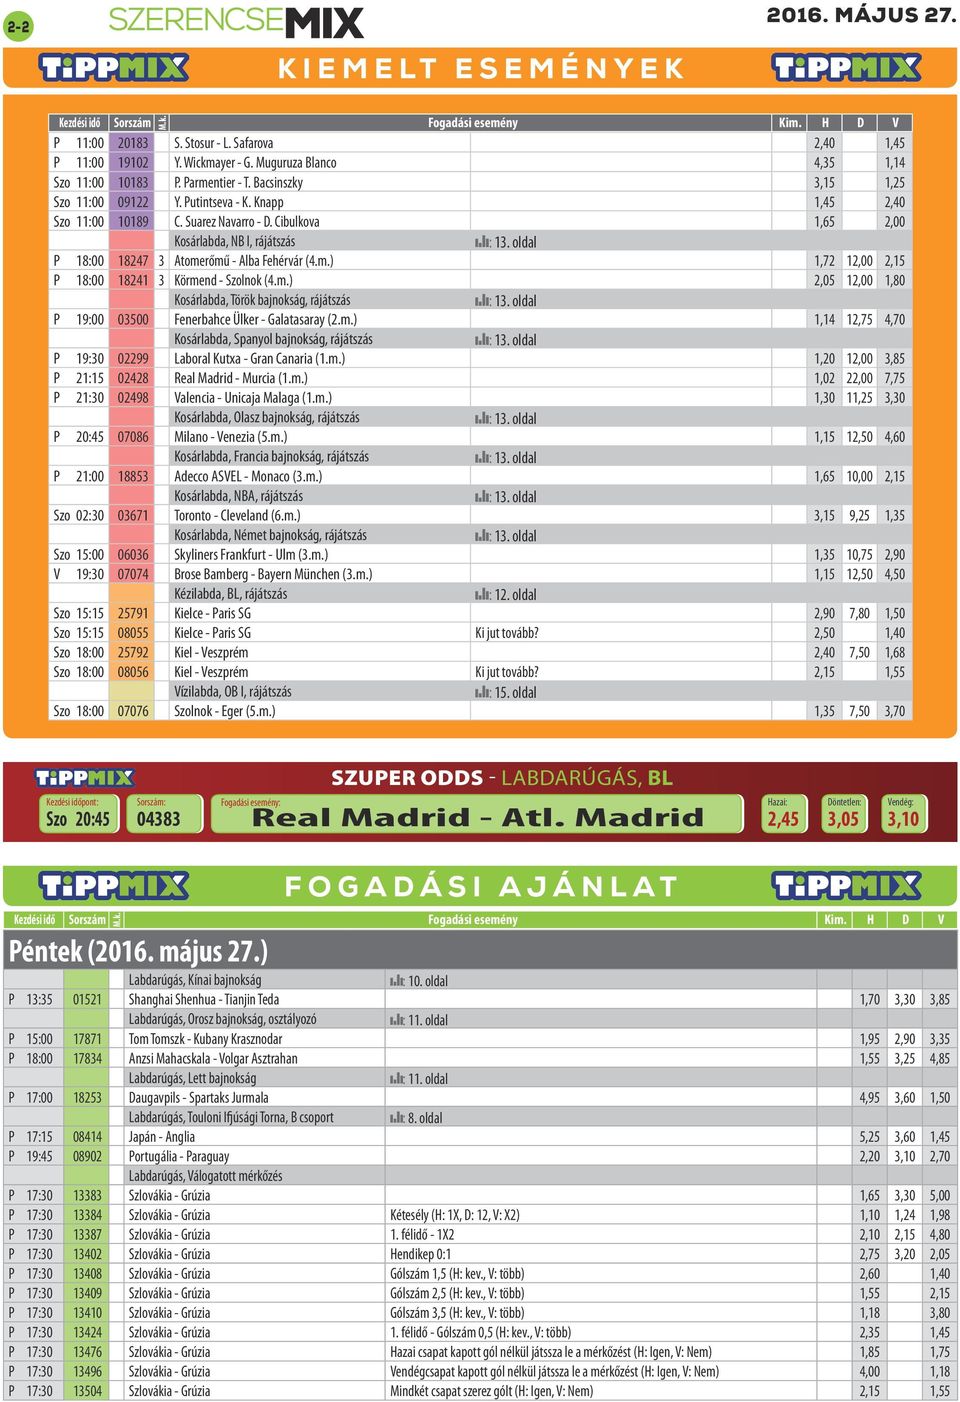 oldal P : Fenerbahce Ülker - Galatasaray (.m.),,, Kosárlabda, Spanyol bajnokság, rájátszás :. oldal P : Laboral Kutxa - Gran Canaria (.m.),,, P : Real Madrid - Murcia (.m.),,, P : Valencia - Unicaja Malaga (.